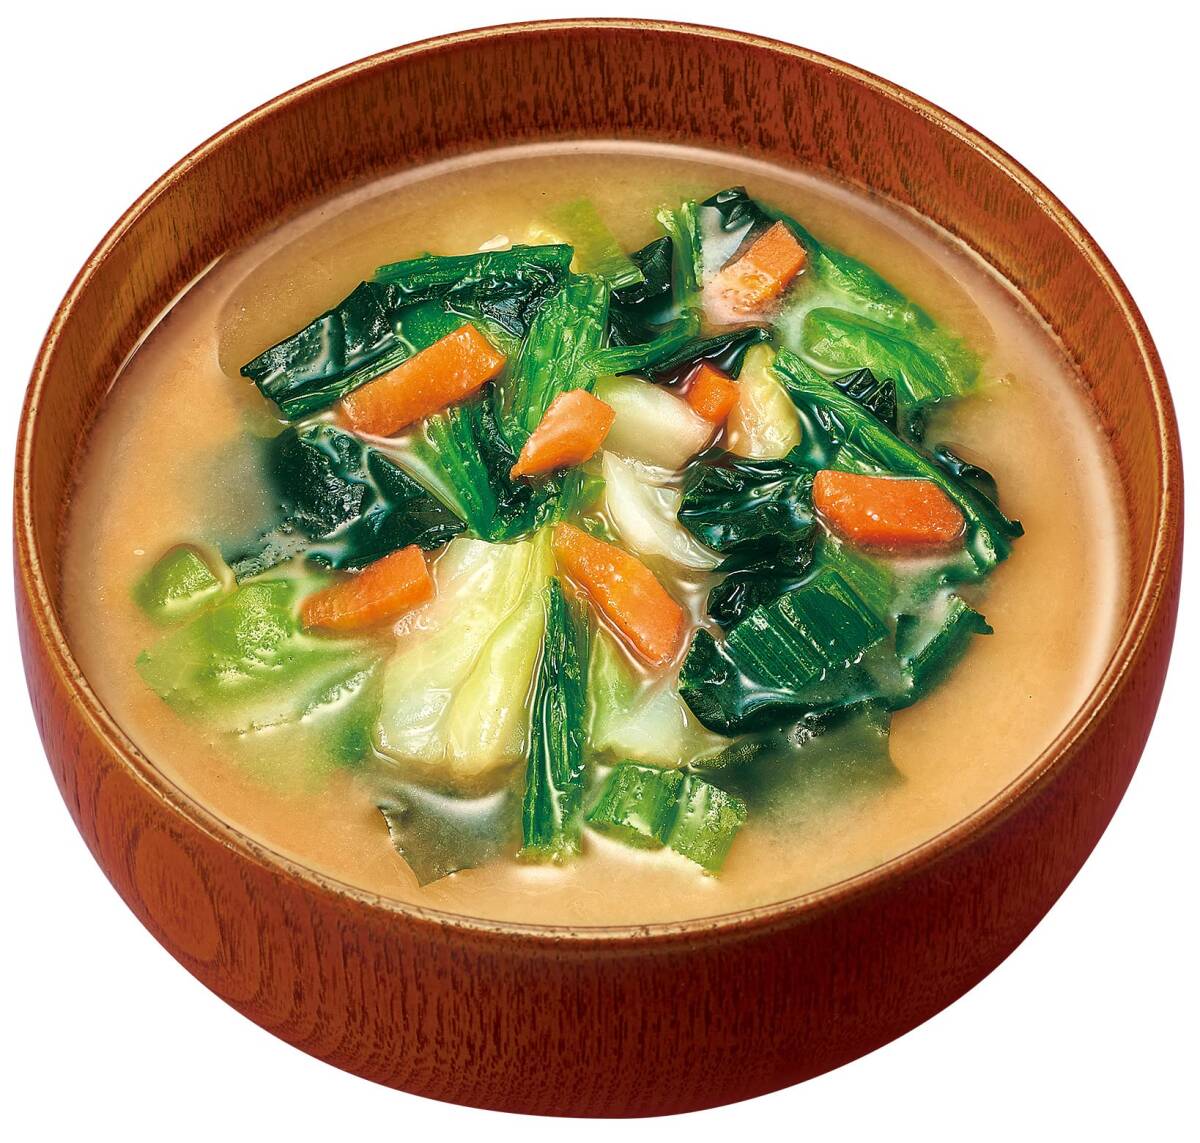 amanof-z. salt always. . miso soup vegetable 10.1g ×10 sack 